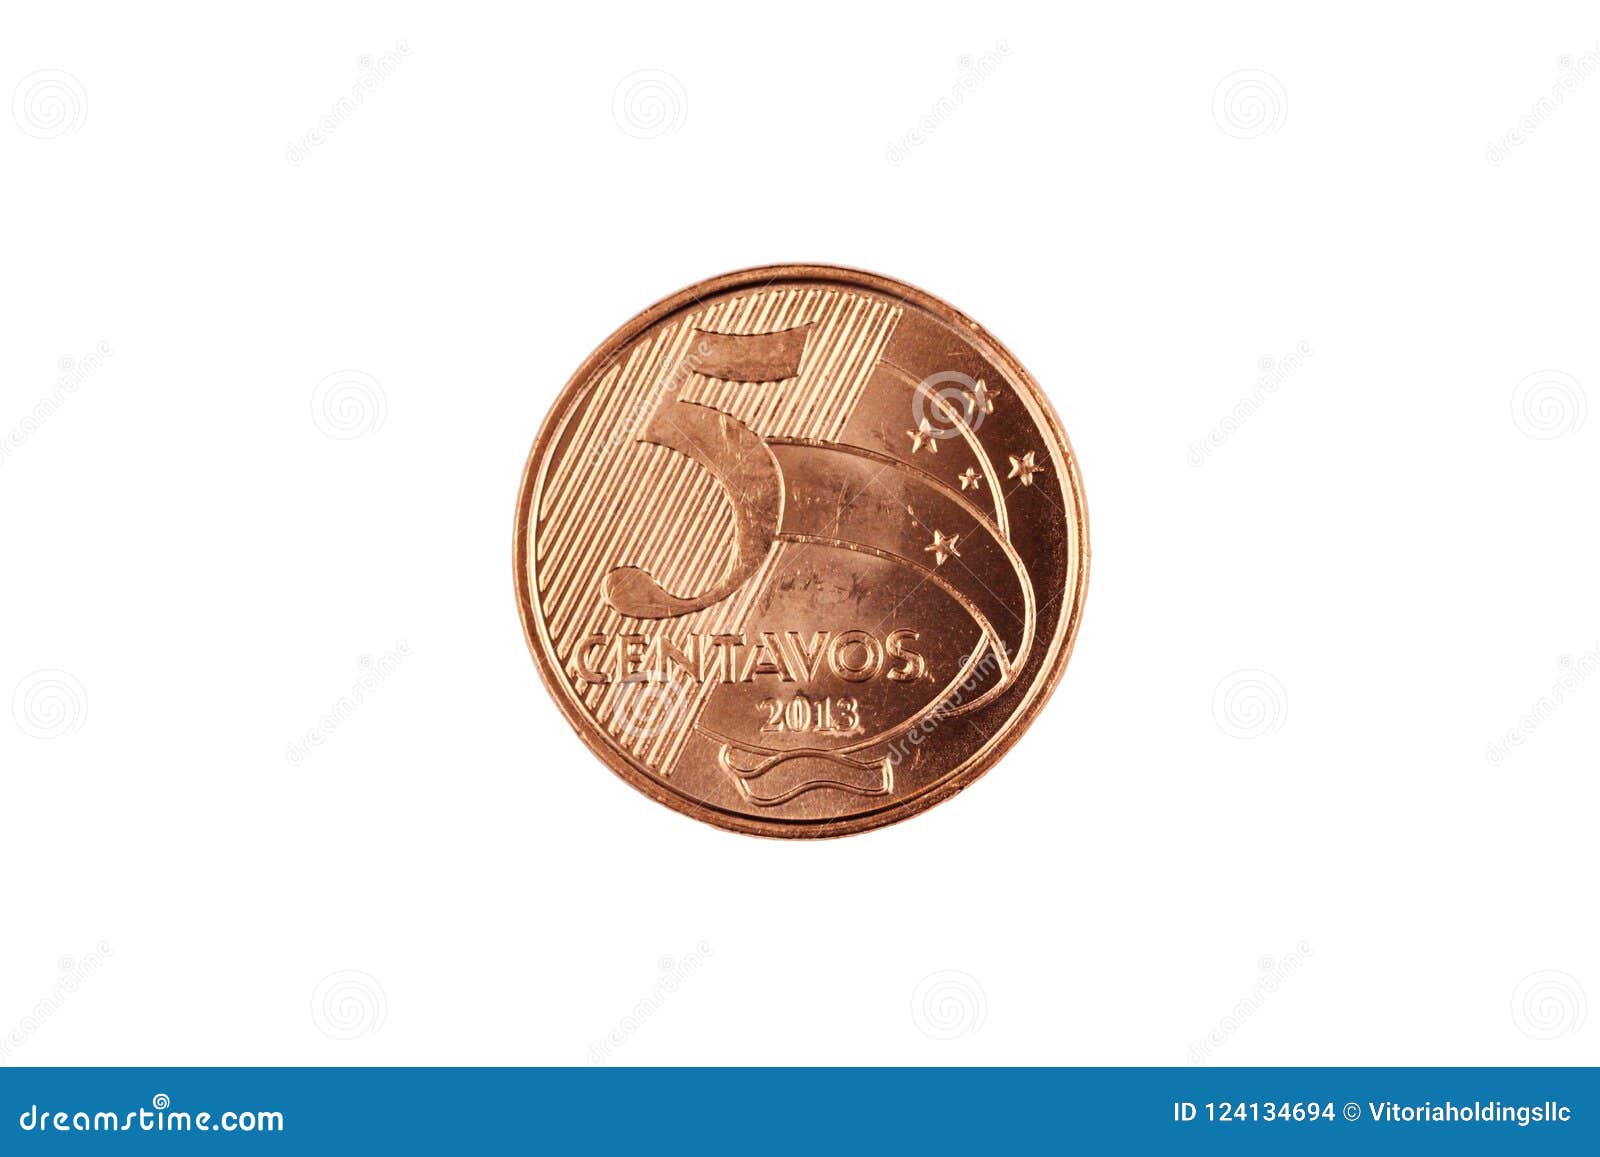 brazilian 5 centavo coin  on a white background